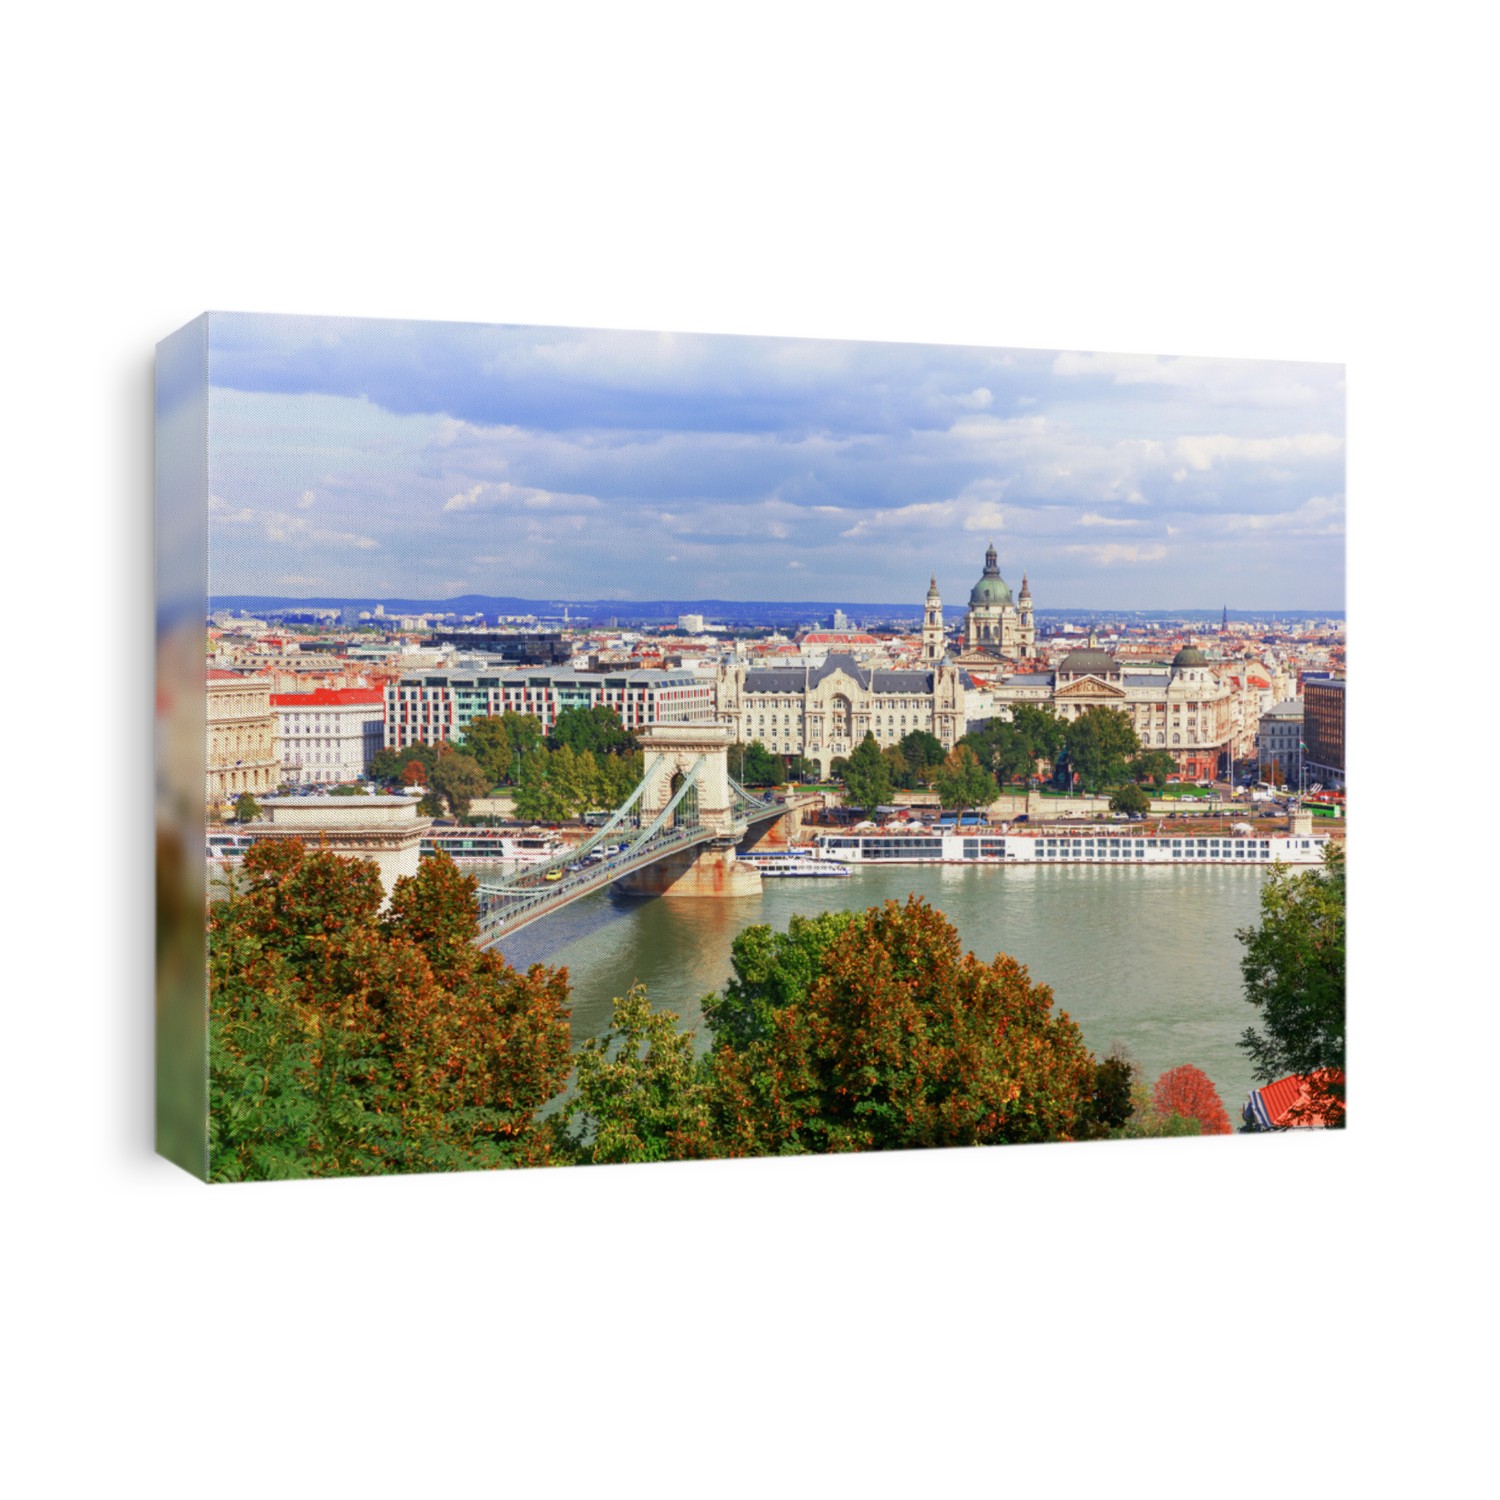 Hungary. Budapest. View on Danube, Chain Bridge and St. Stephen's Basilica